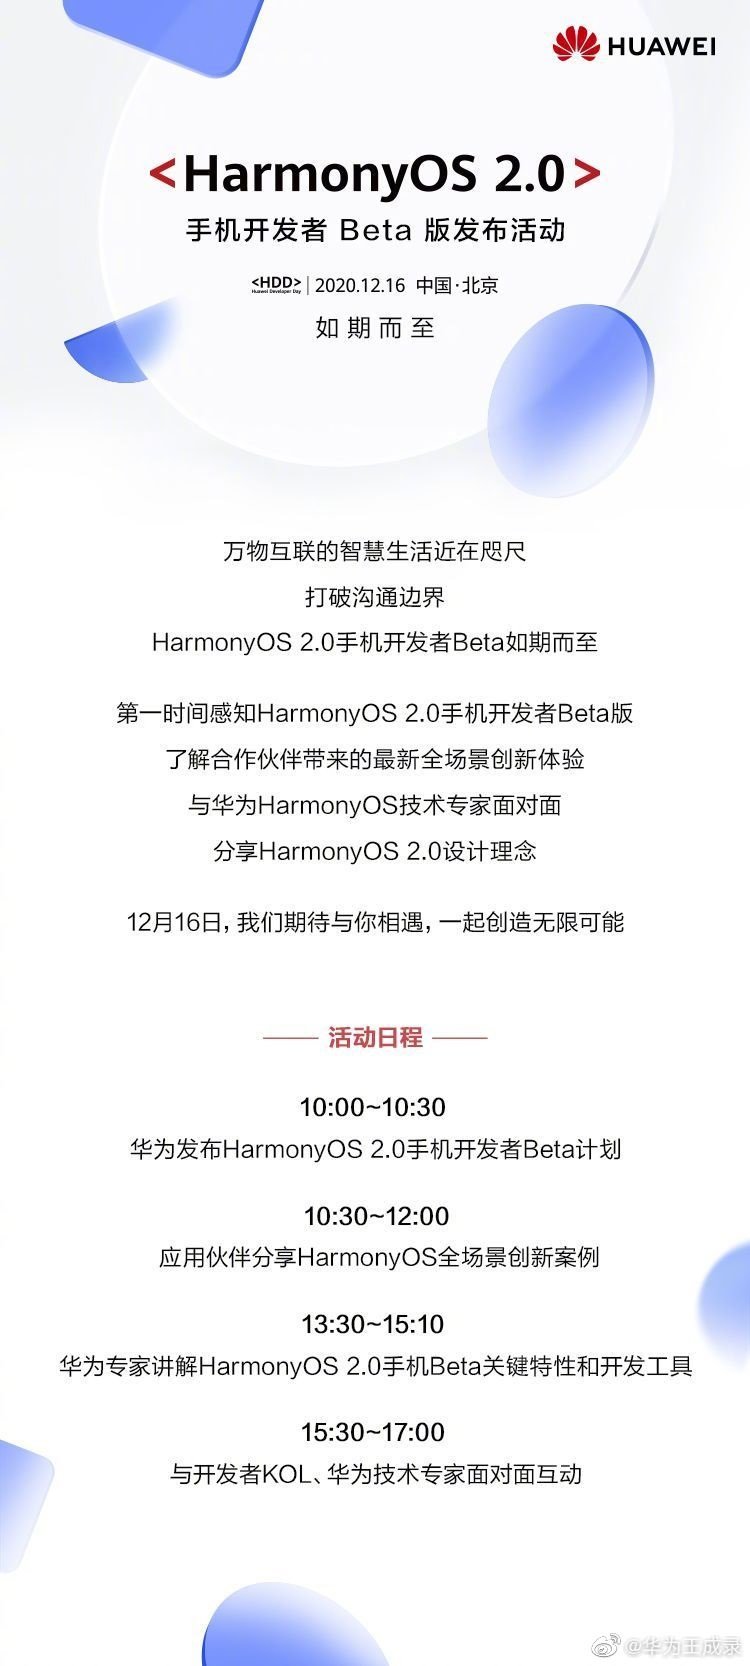 Бета-релиз HarmonyOS 2.0 ожидается завтра